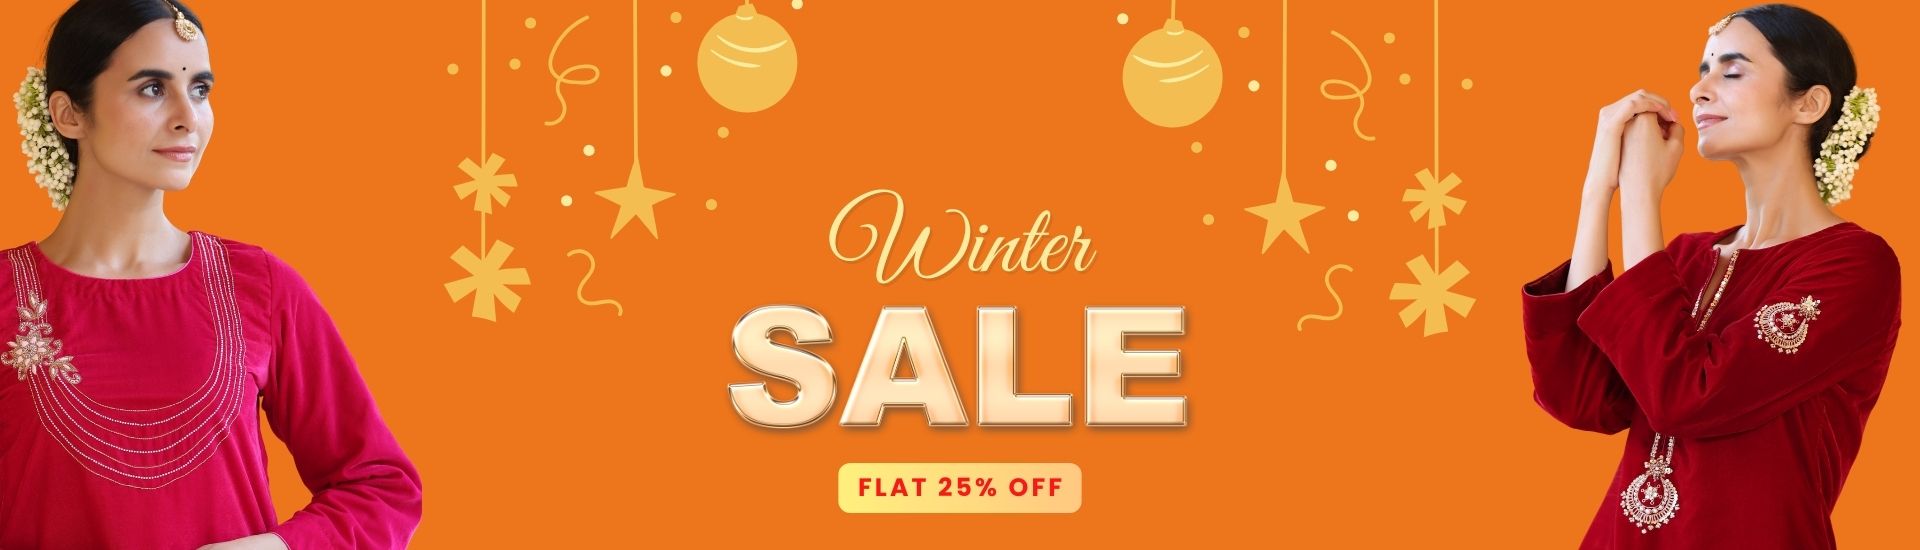 Gillori Winter Sale Flat 25% off